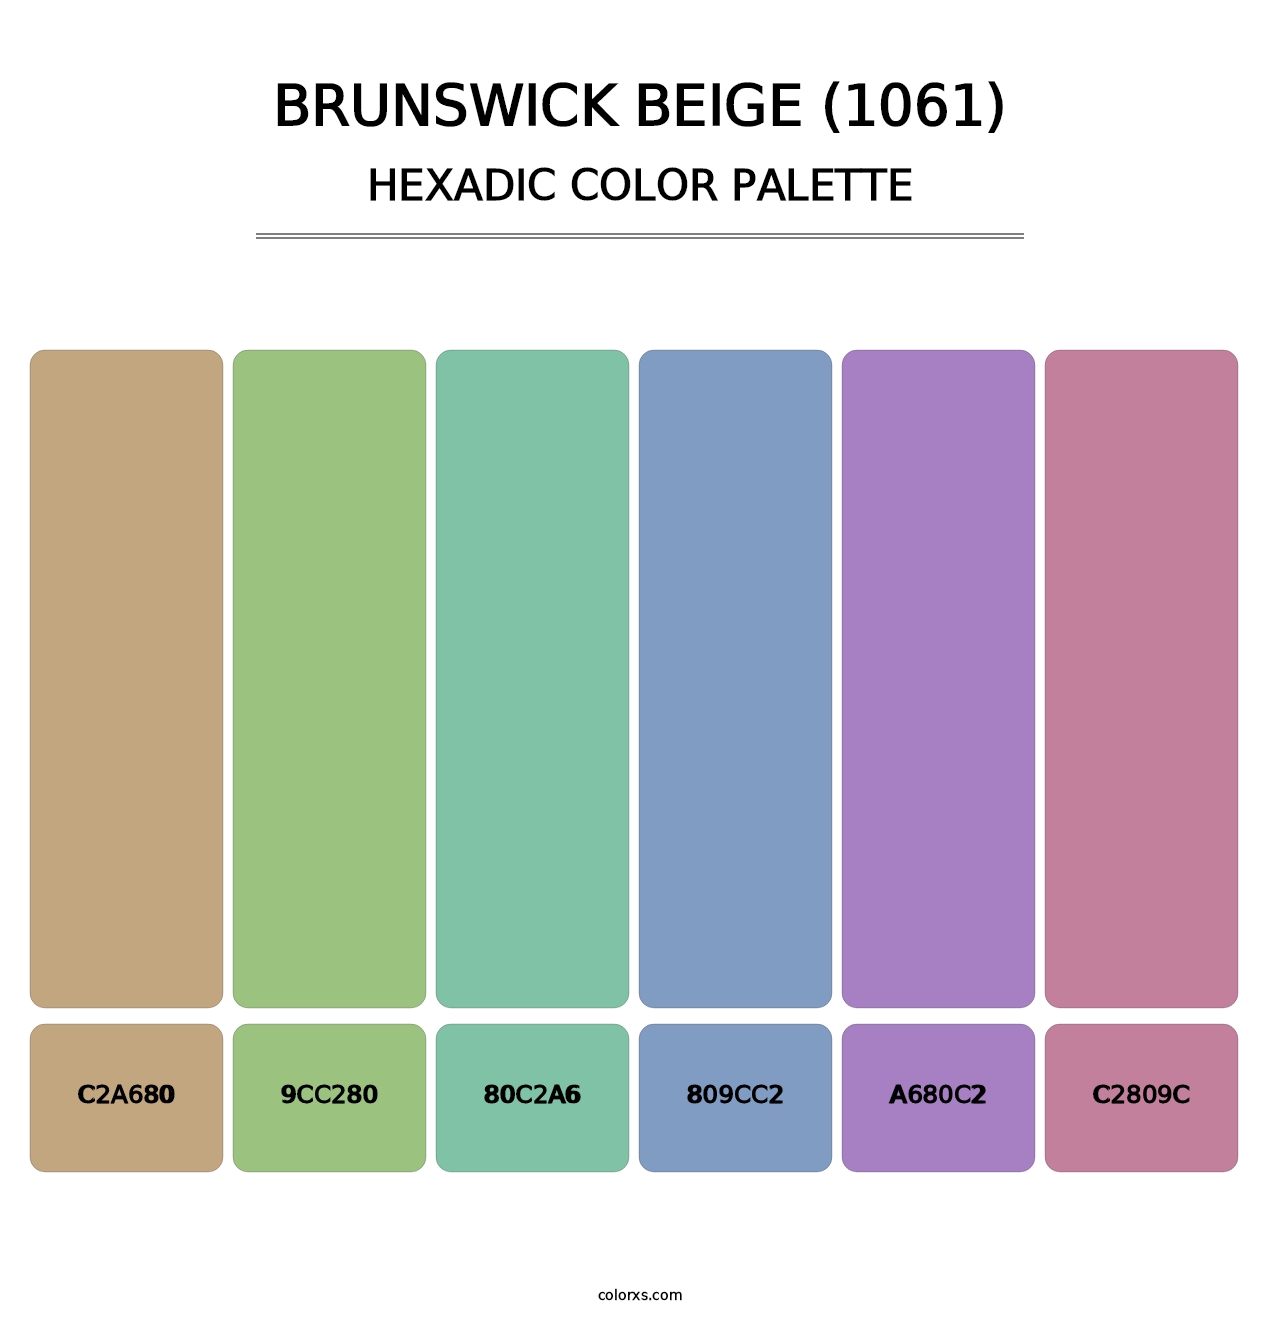 Brunswick Beige (1061) - Hexadic Color Palette